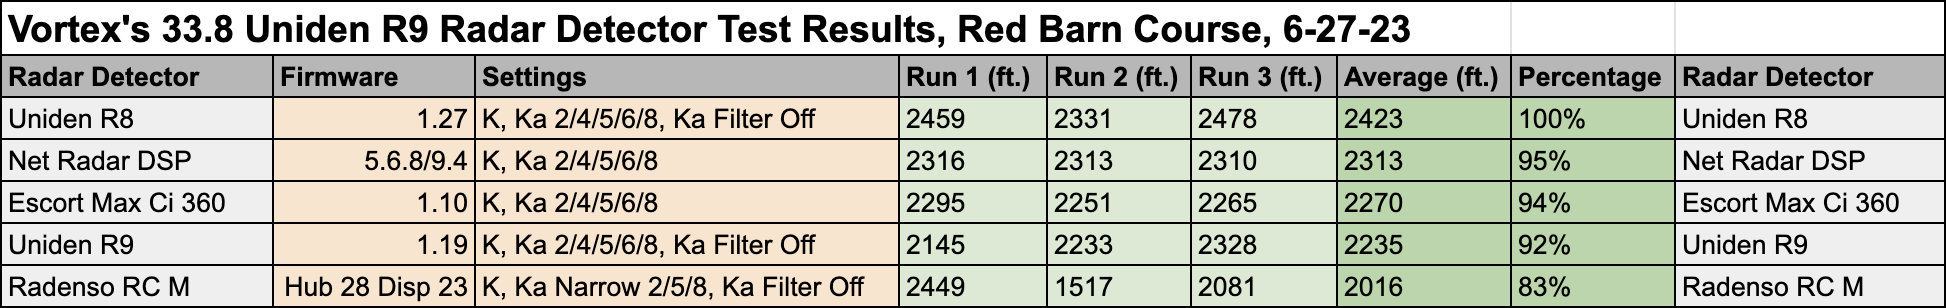 Uniden R9 33.8 Results Data